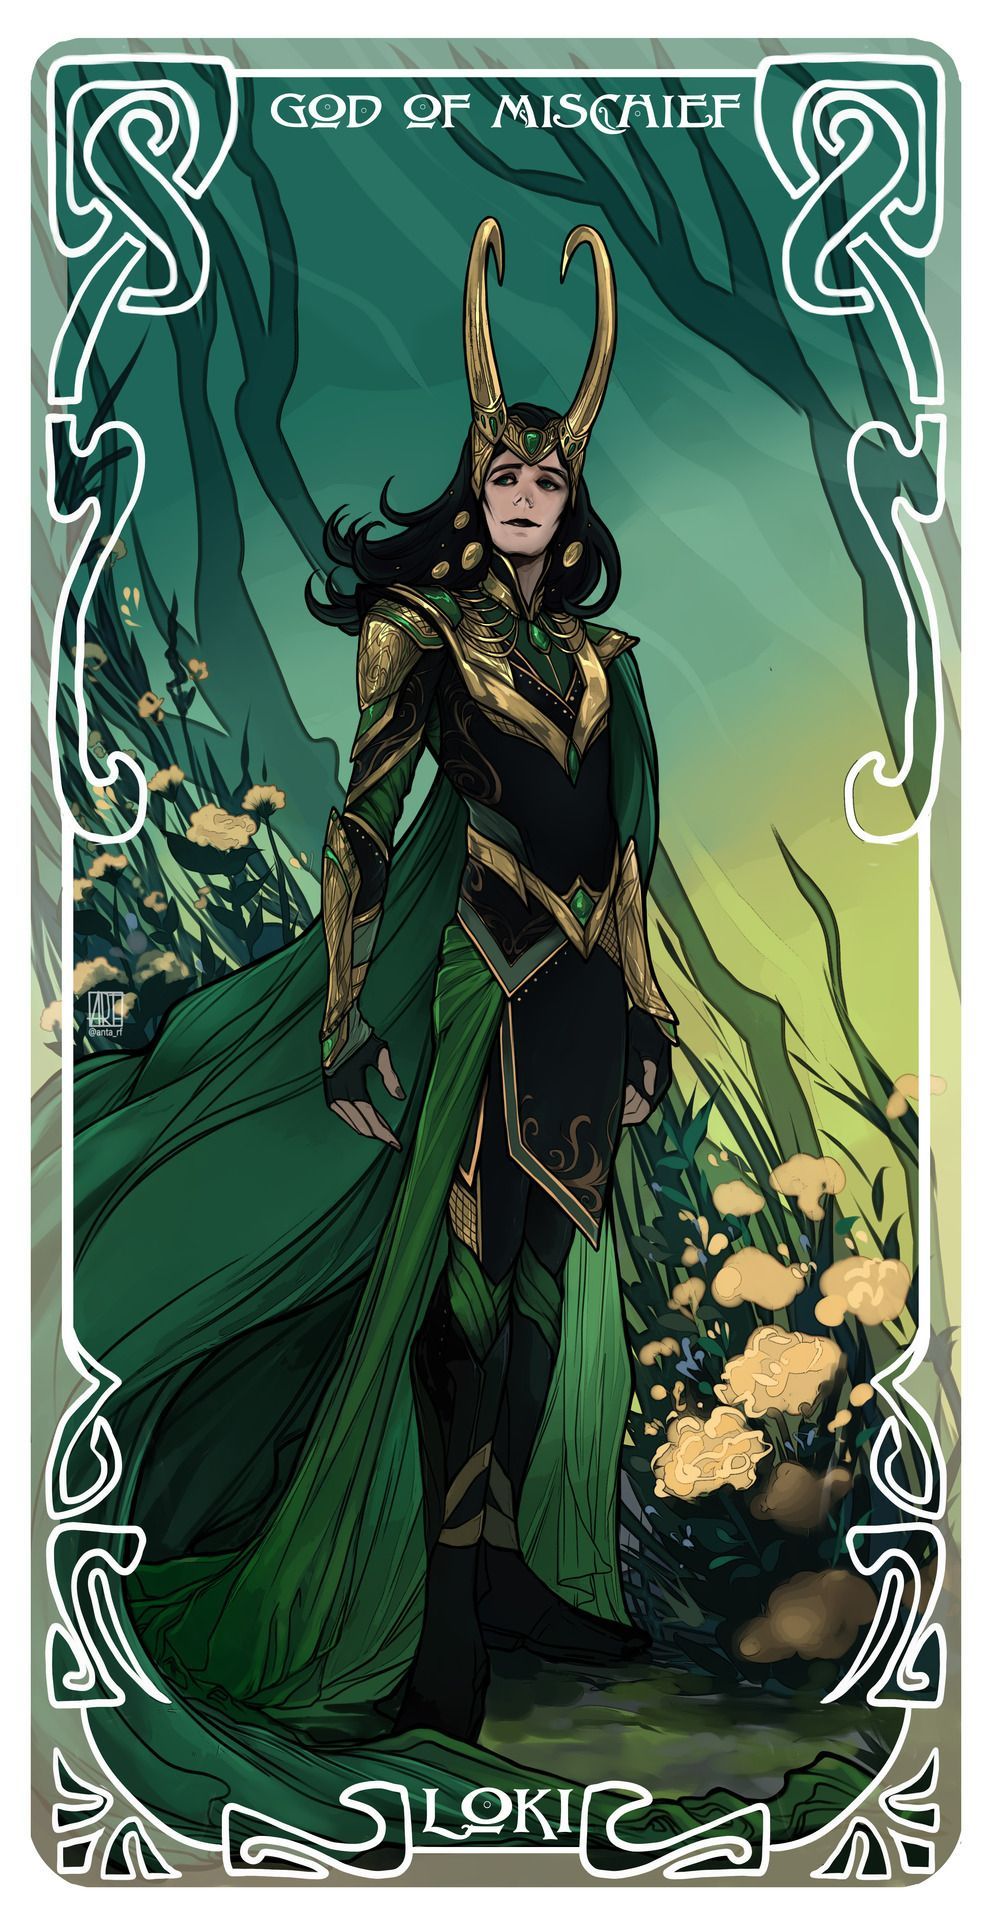 A new poster with Loki. Loki art, Loki cosplay, Loki costume